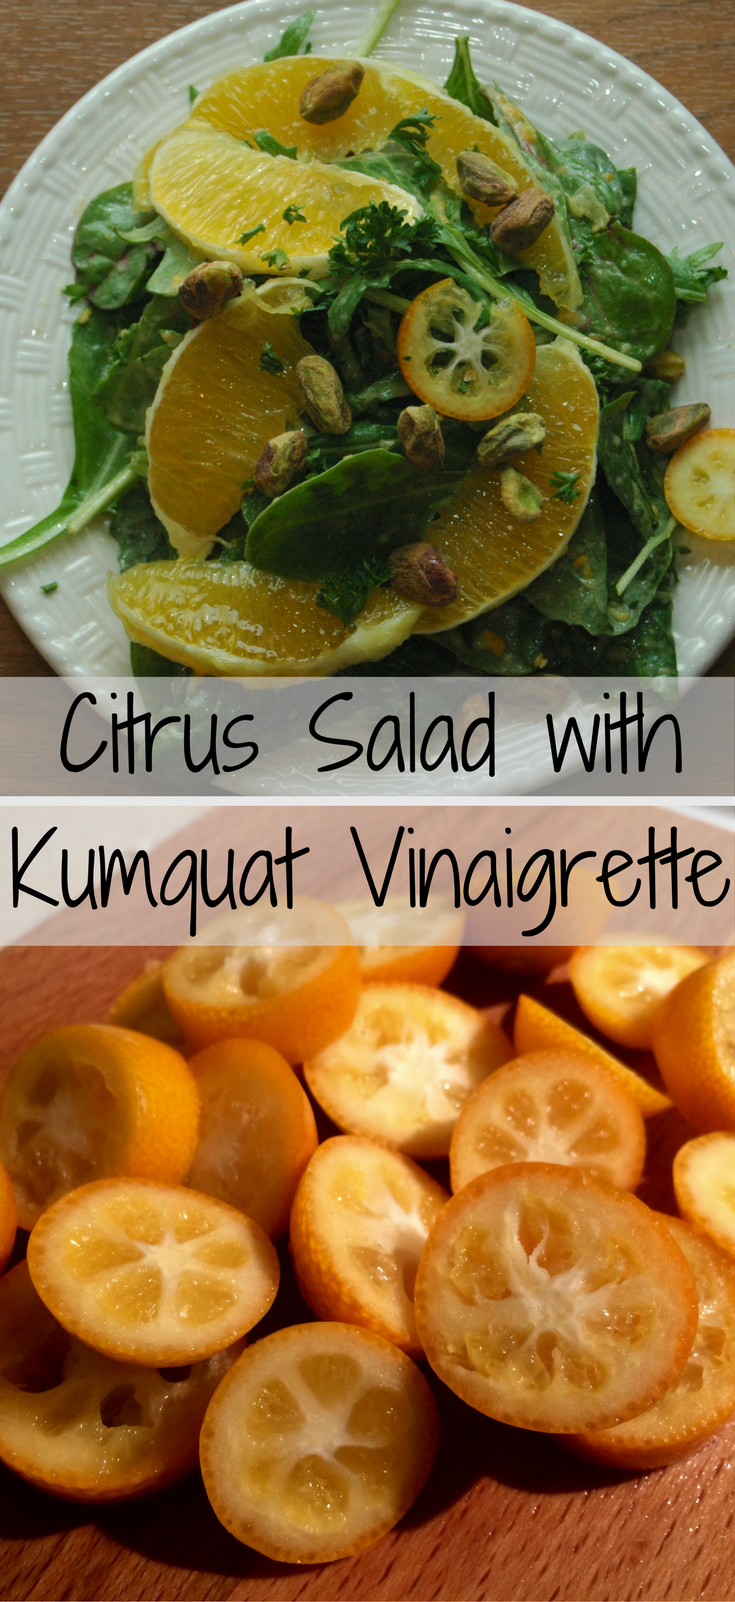 Citrus Salad with Kumquat Vinaigrette - Eva Minette